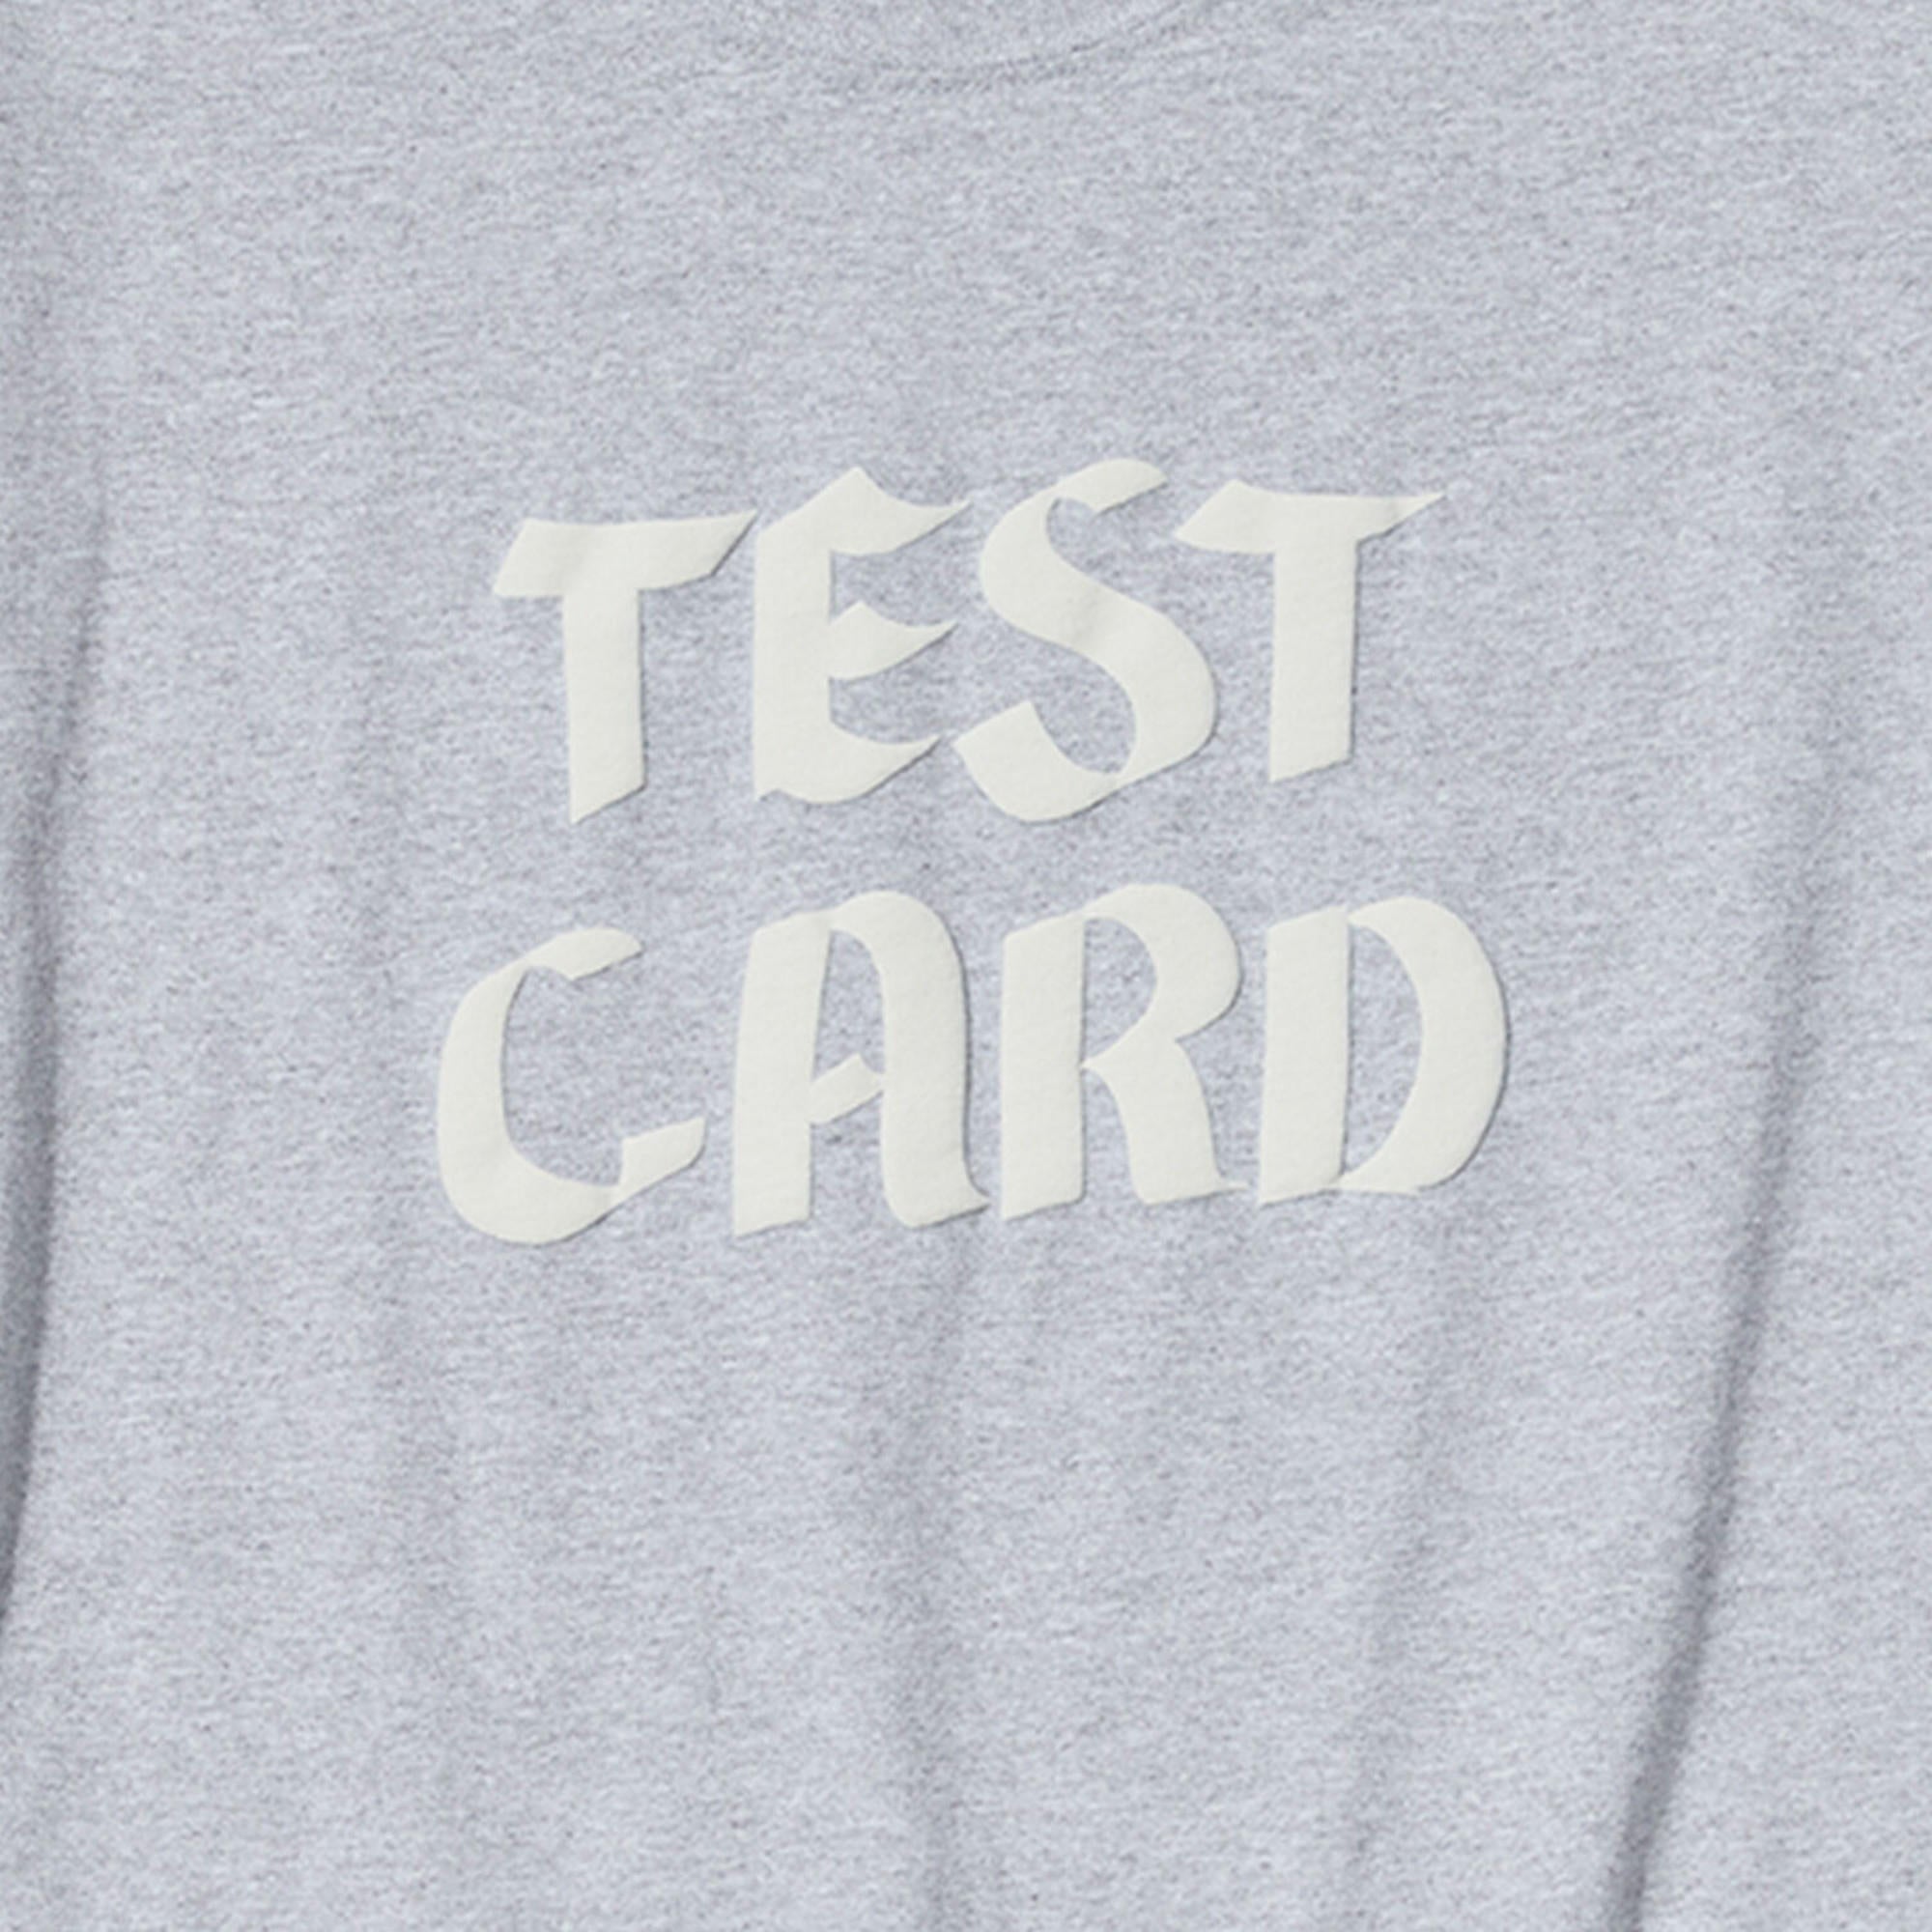 TOMOO GOKITA - 'TEST CARD' S/S TEE